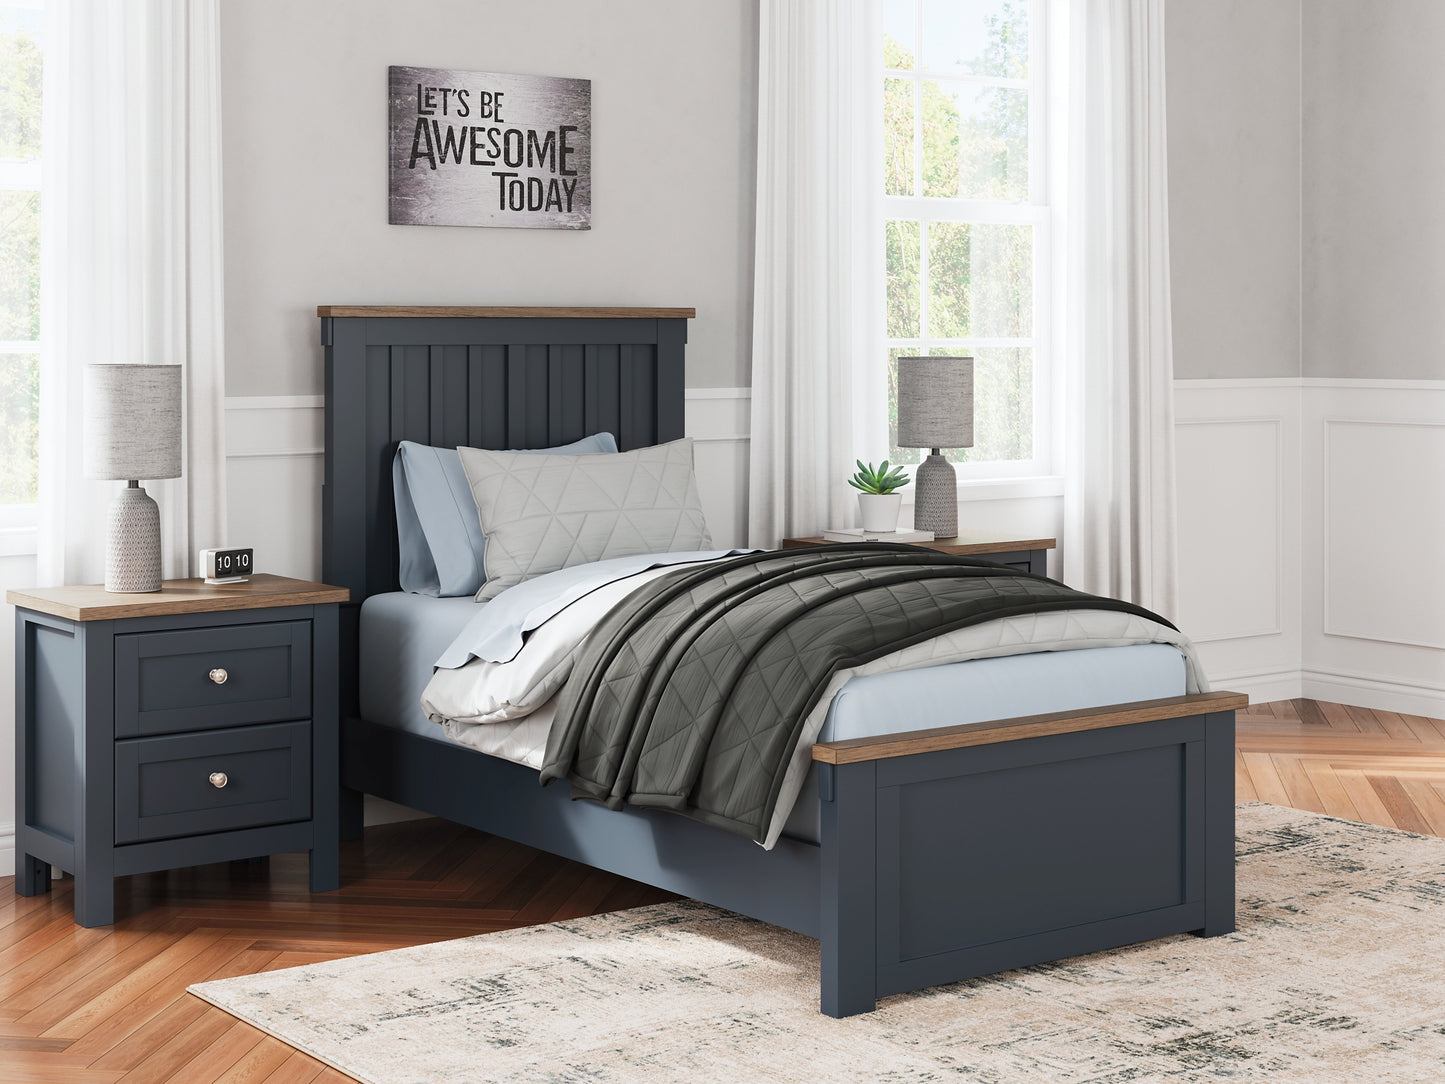 Landocken Twin Panel Bed with Mirrored Dresser, Chest and 2 Nightstands